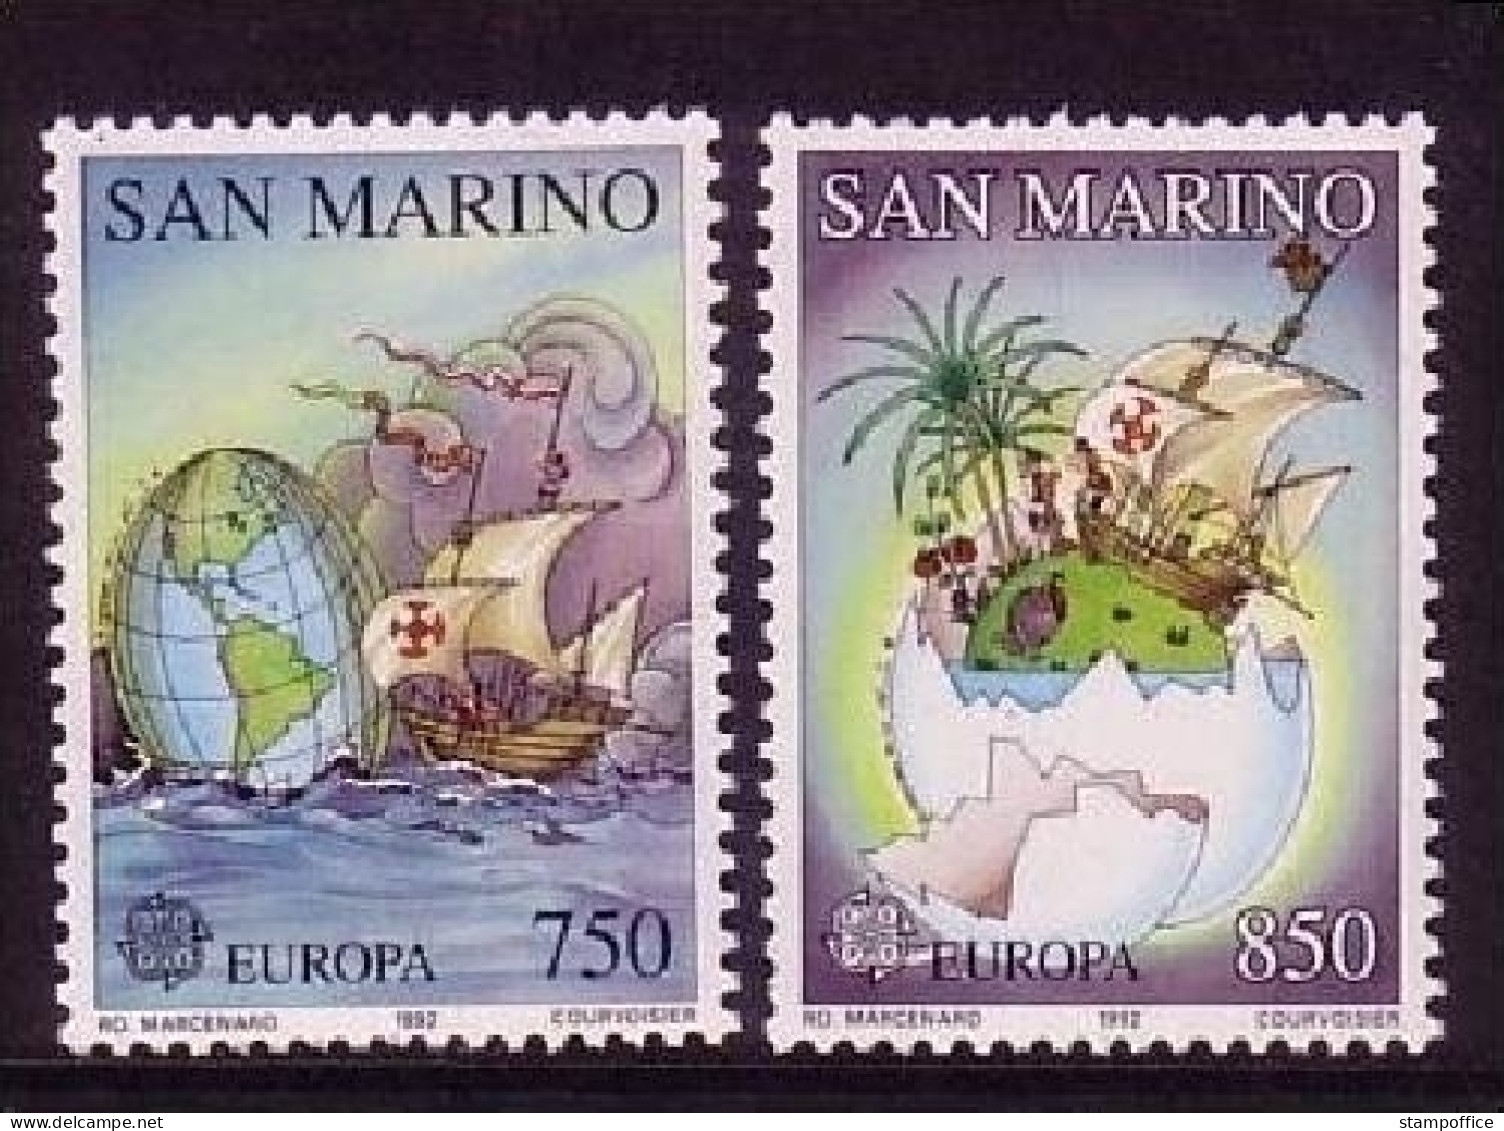 SAN MARINO MI-NR. 1508-1509 POSTFRISCH(MINT) EUROPA 1992 ENTDECKUNG AMERIKAS COLUMBUS - 1992